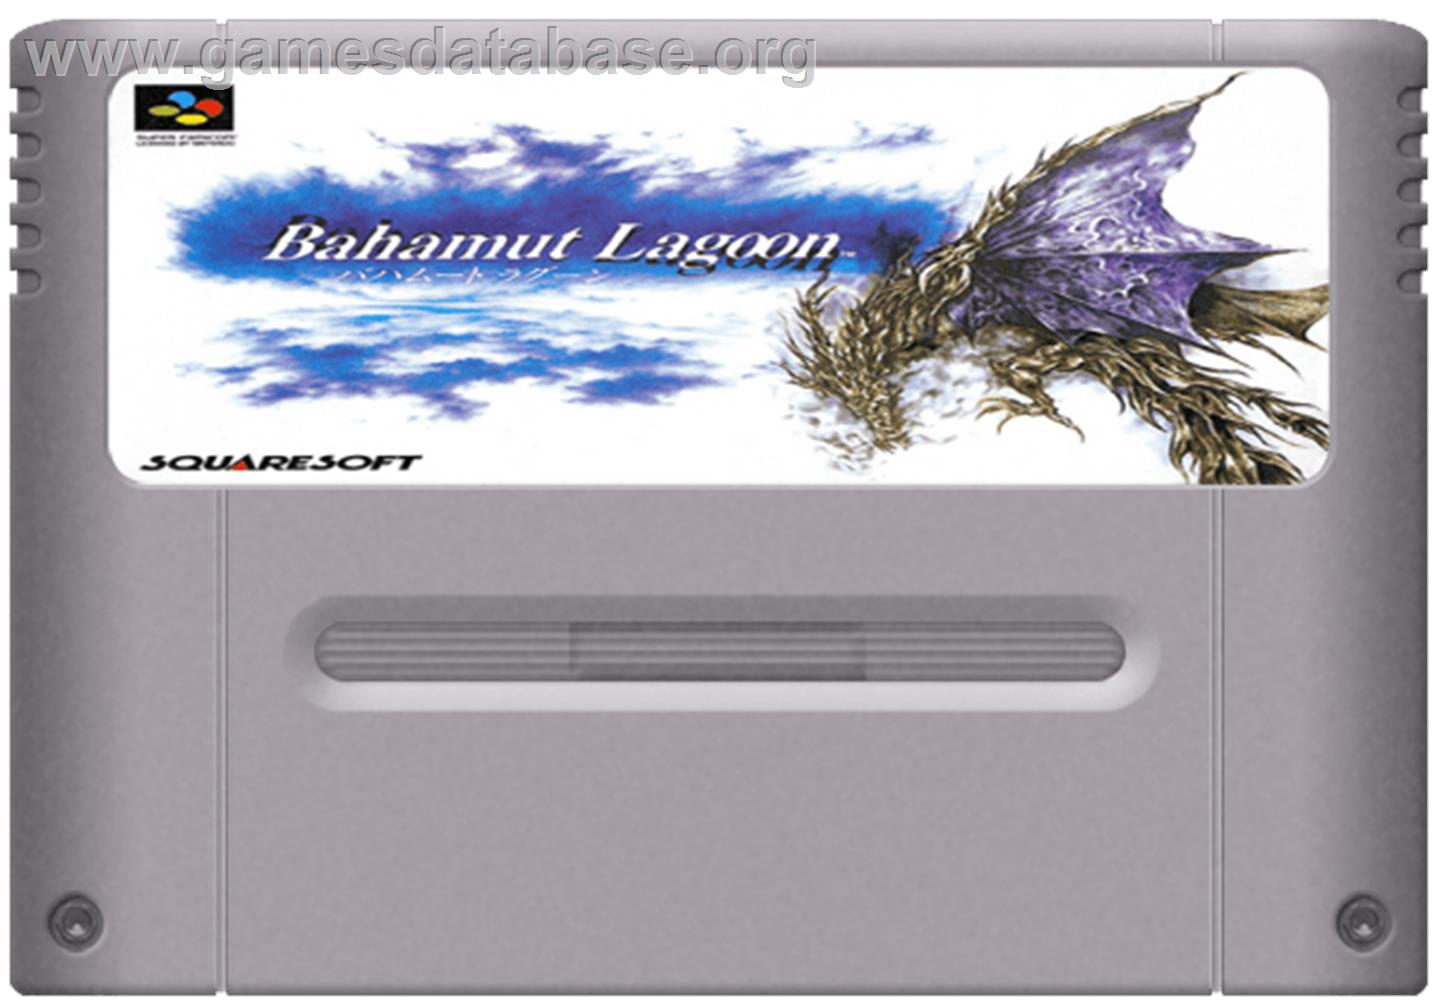 Bahamut Lagoon - Nintendo SNES - Artwork - Cartridge